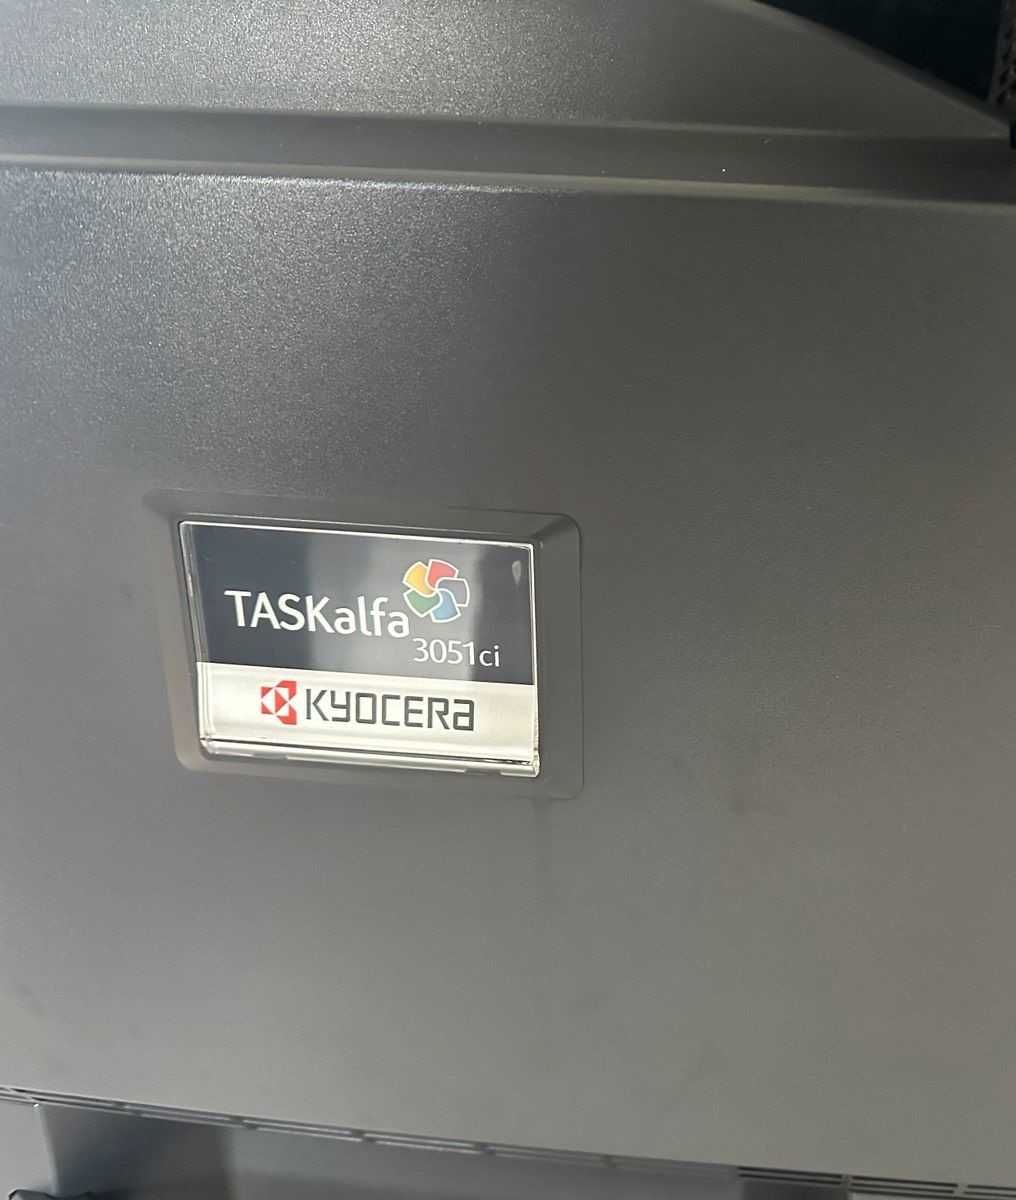 Multifunctional Laser color Kyocera Taskalfa 3051ci